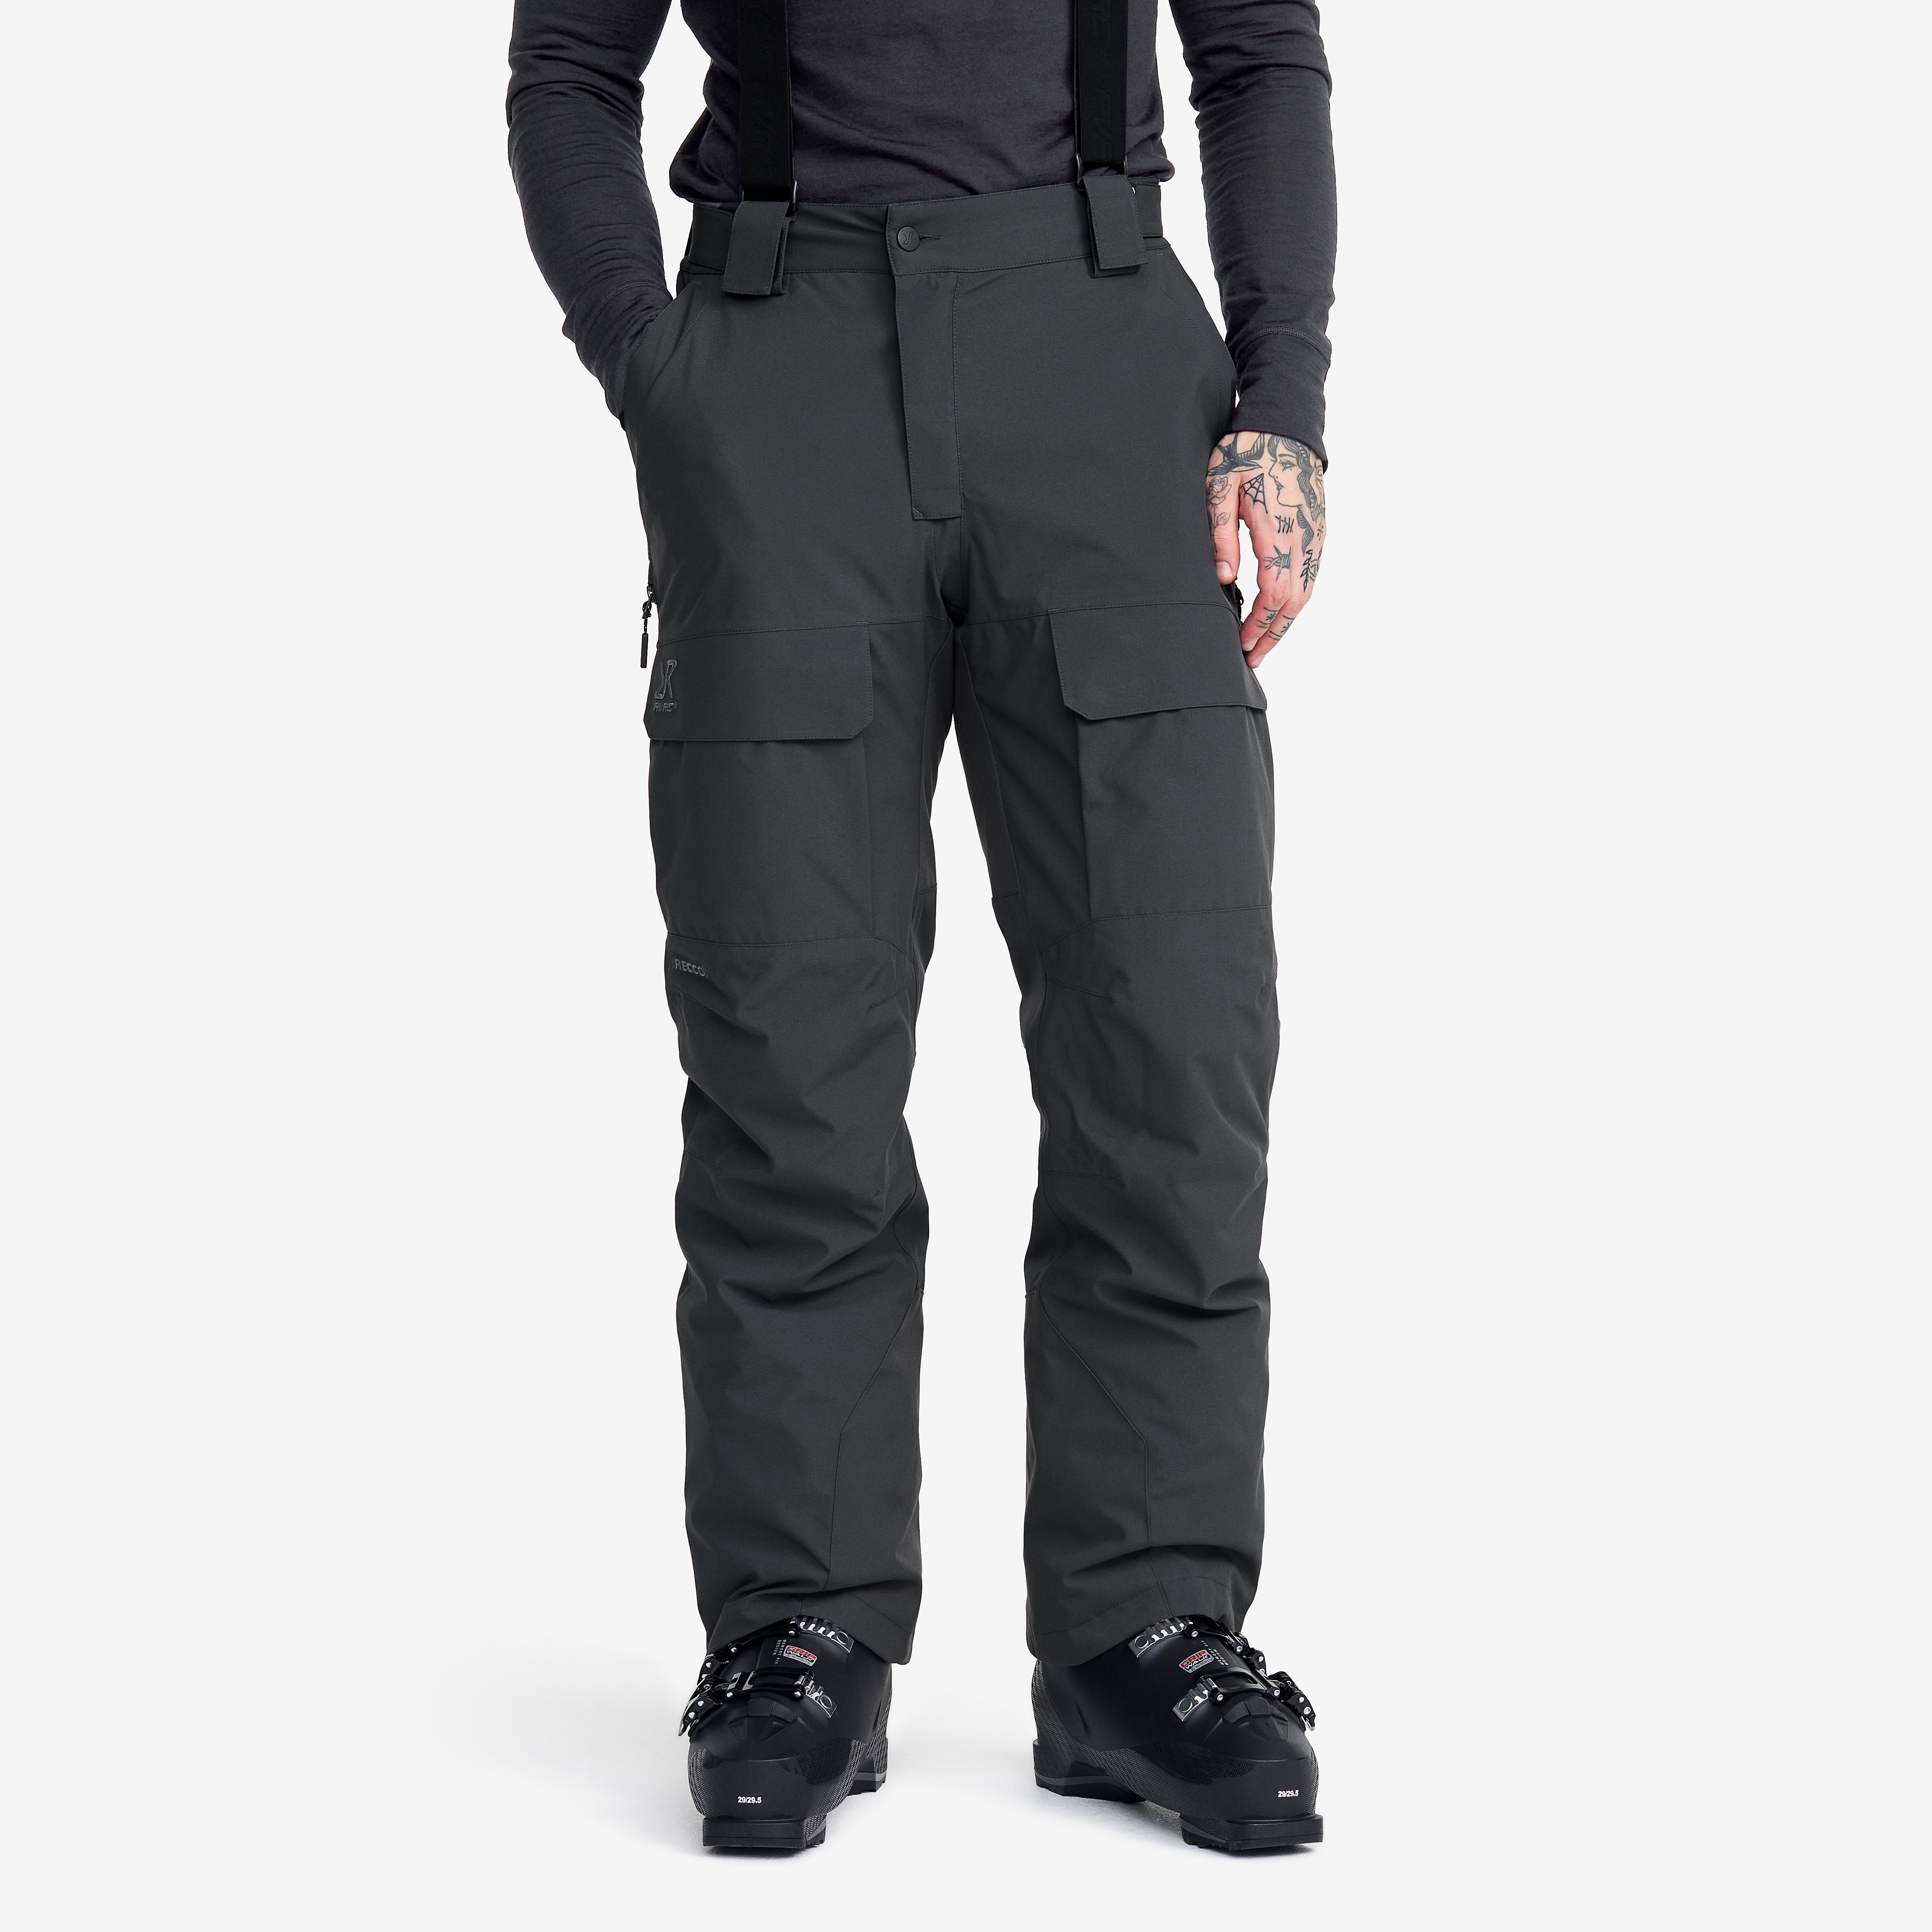 Halo 2L Insulated Ski Pants – Herr – Anthracite Storlek:XL – Vinterbyxor